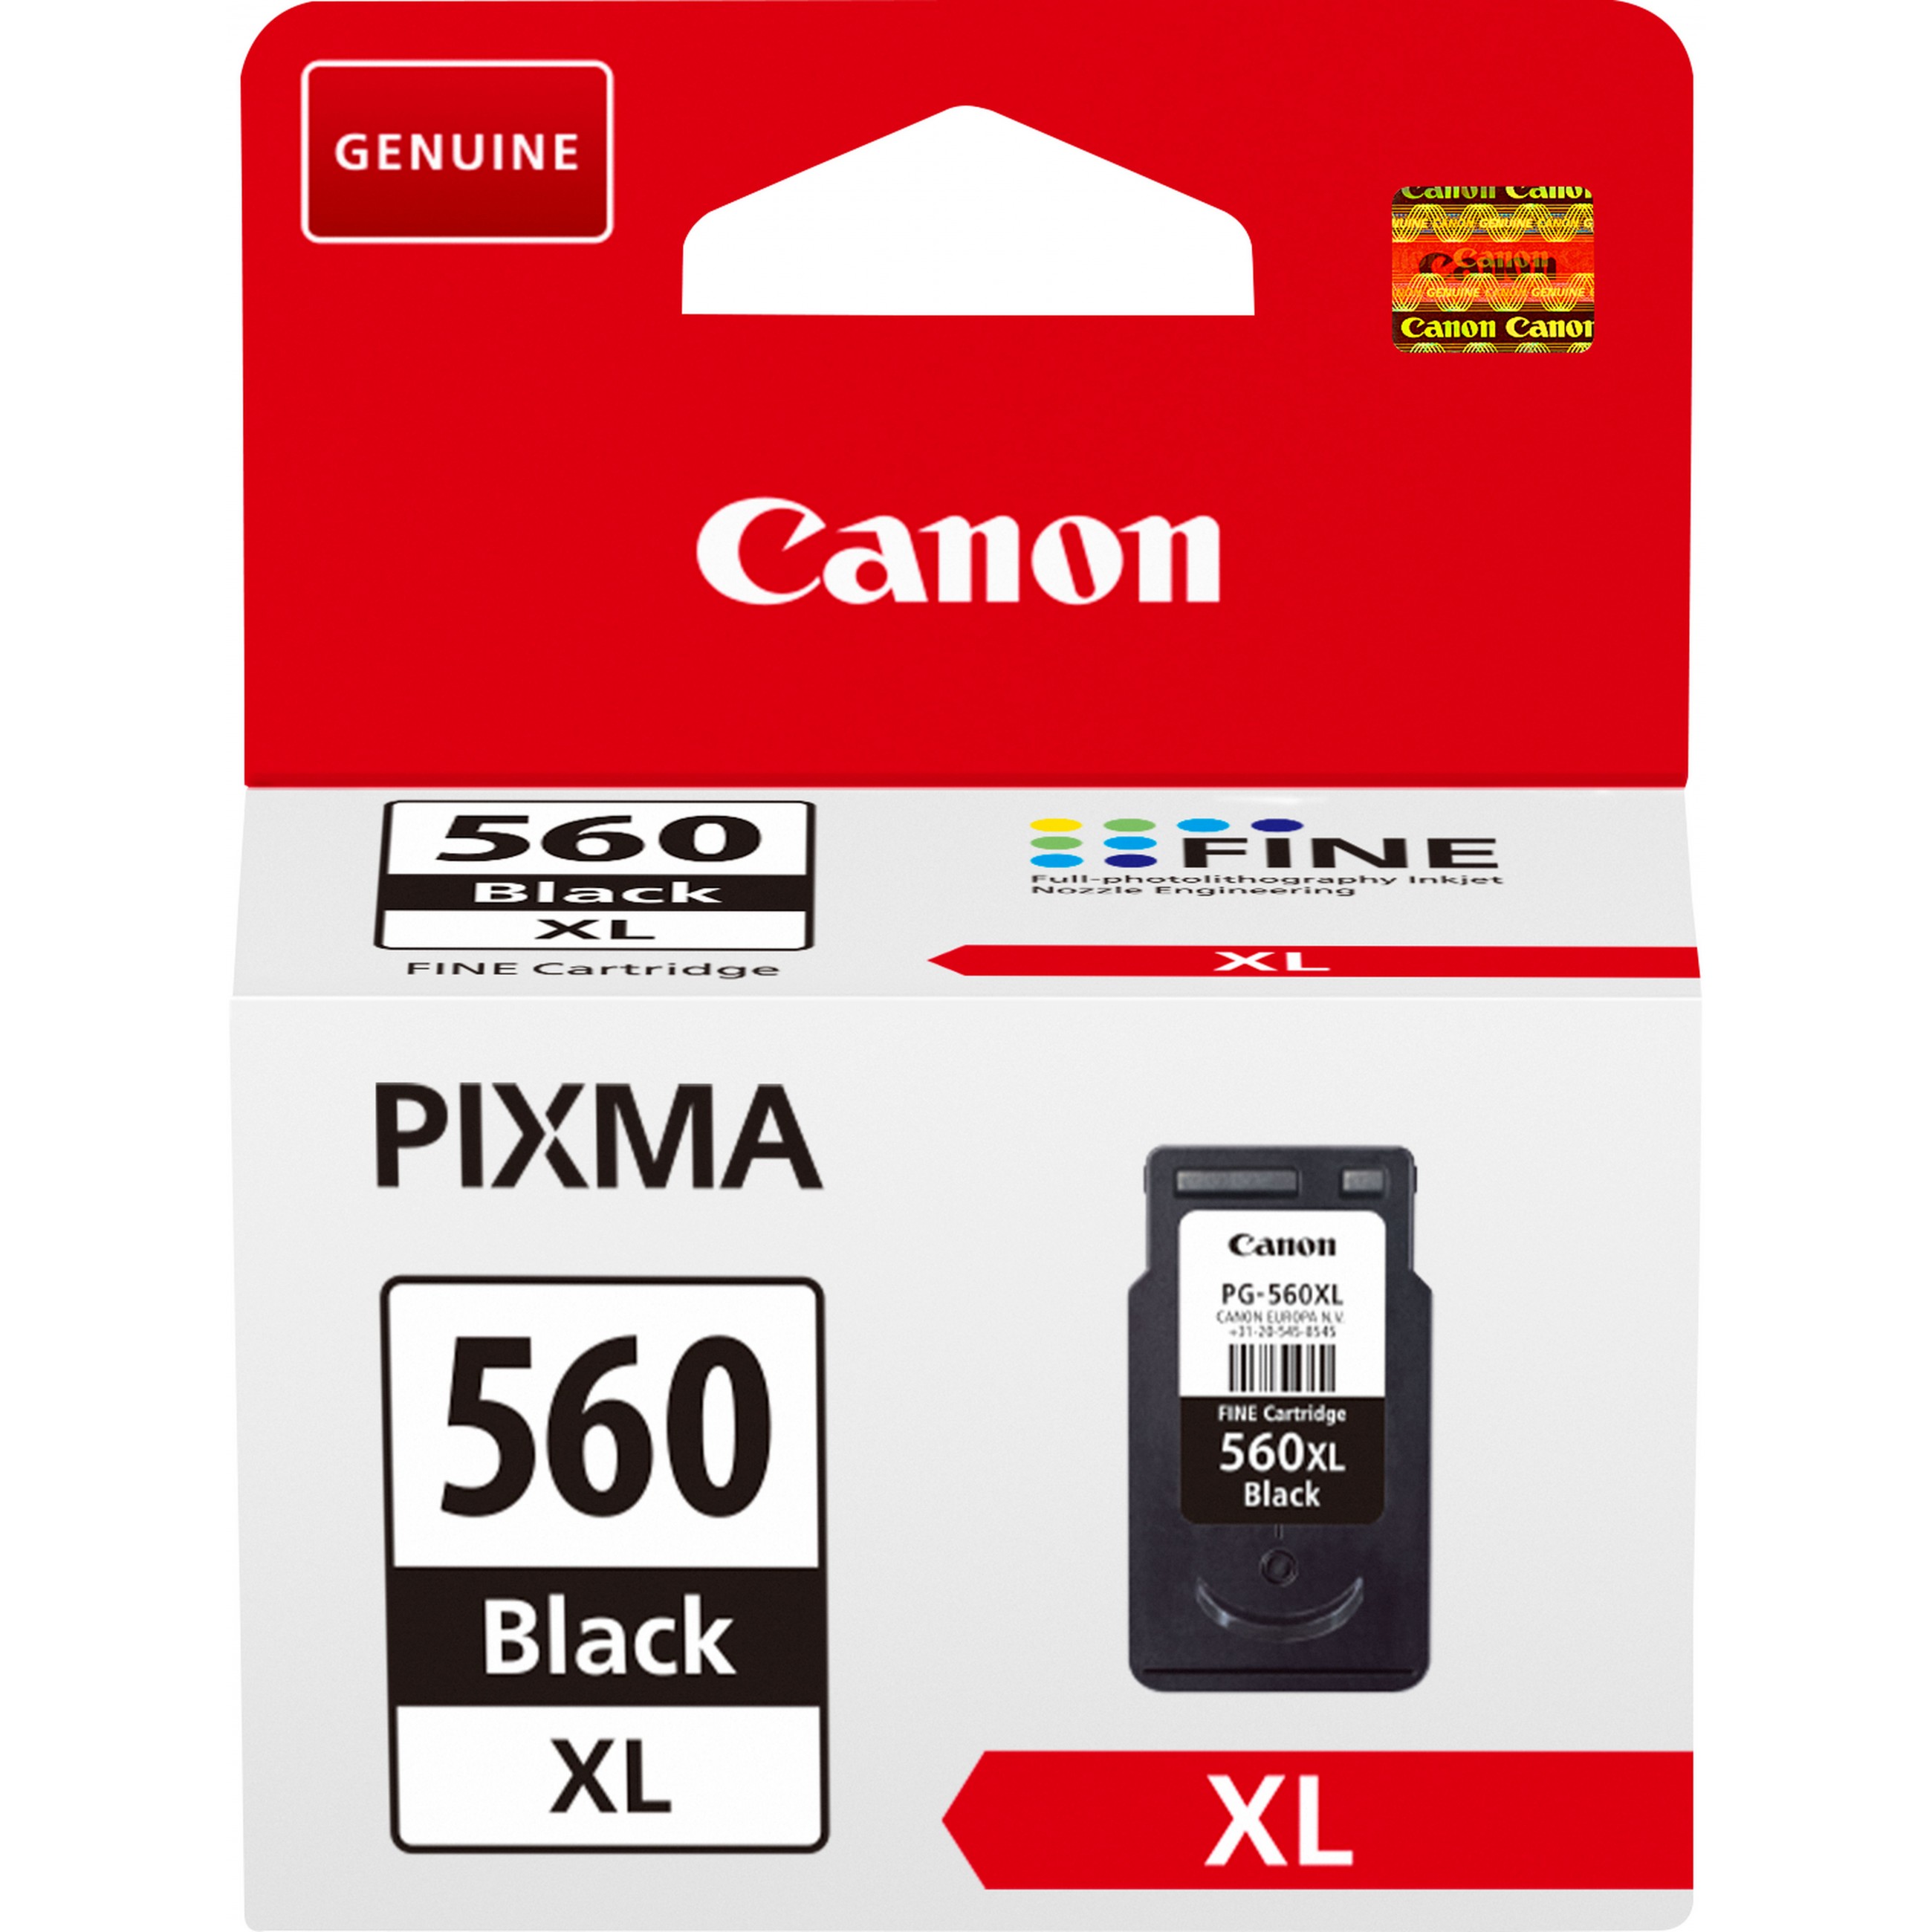 Canon PG-560XL ink cartridge